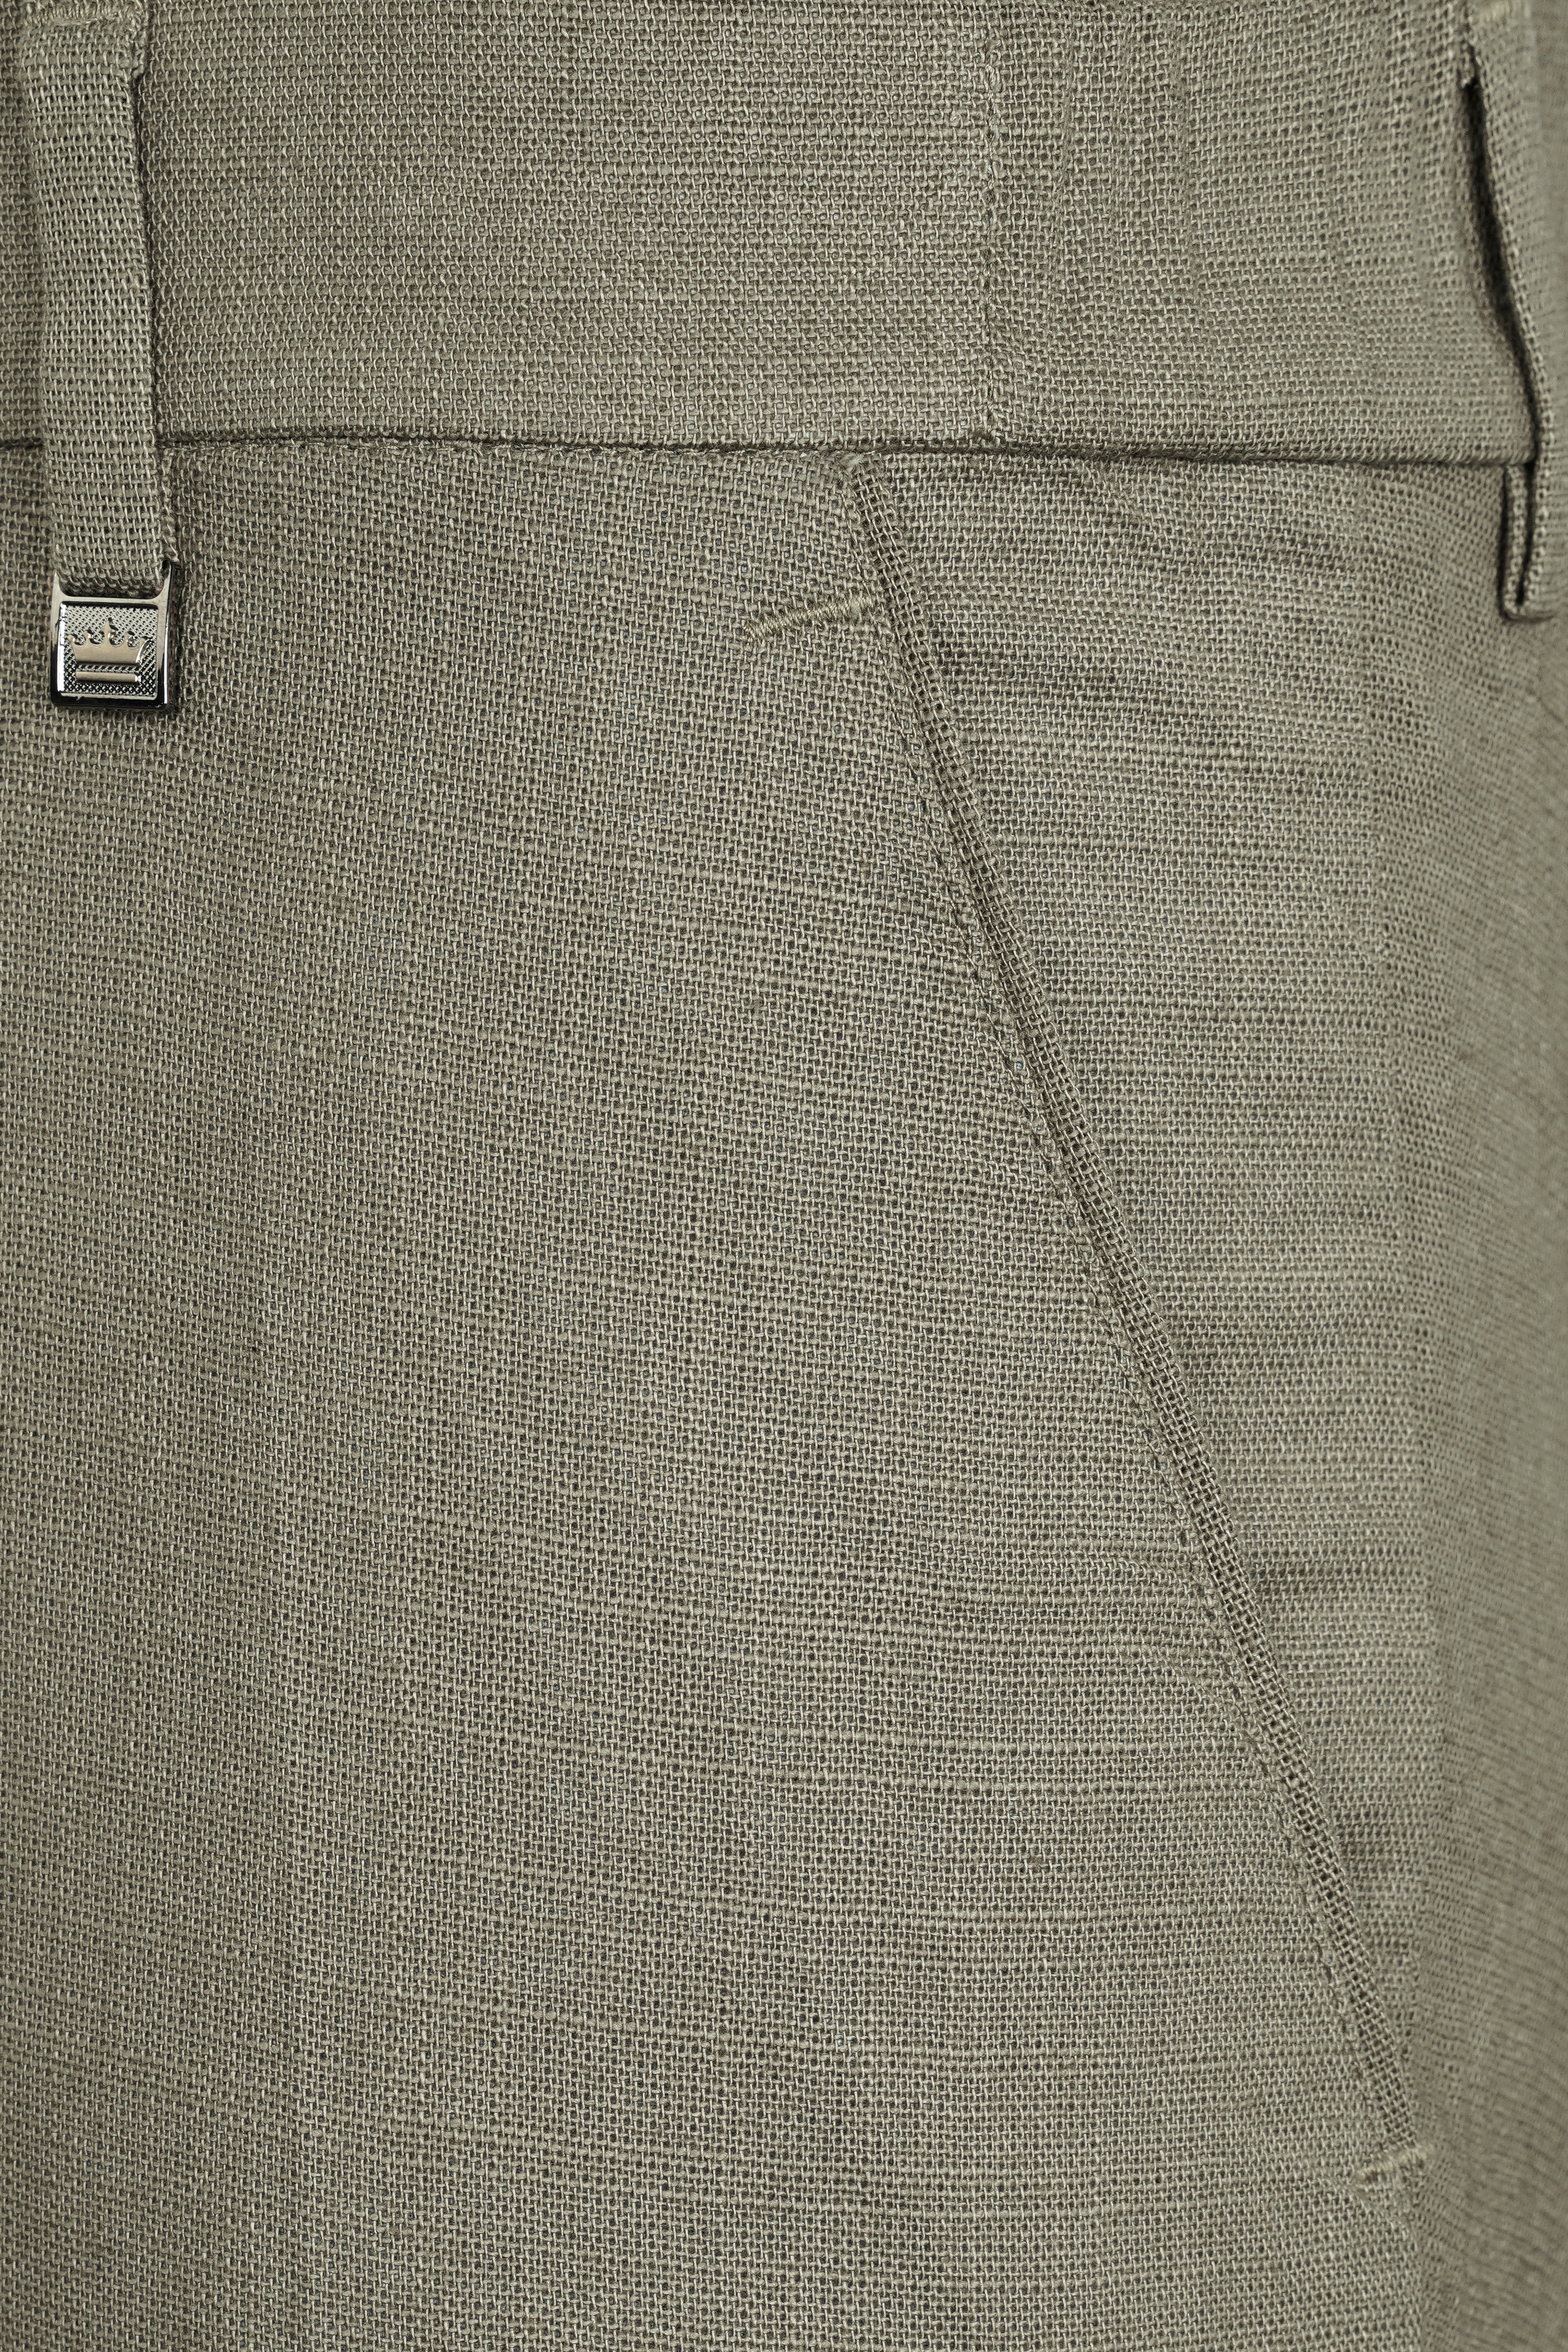 Lemon Grass Green Textured Premium Cotton Pant For Men